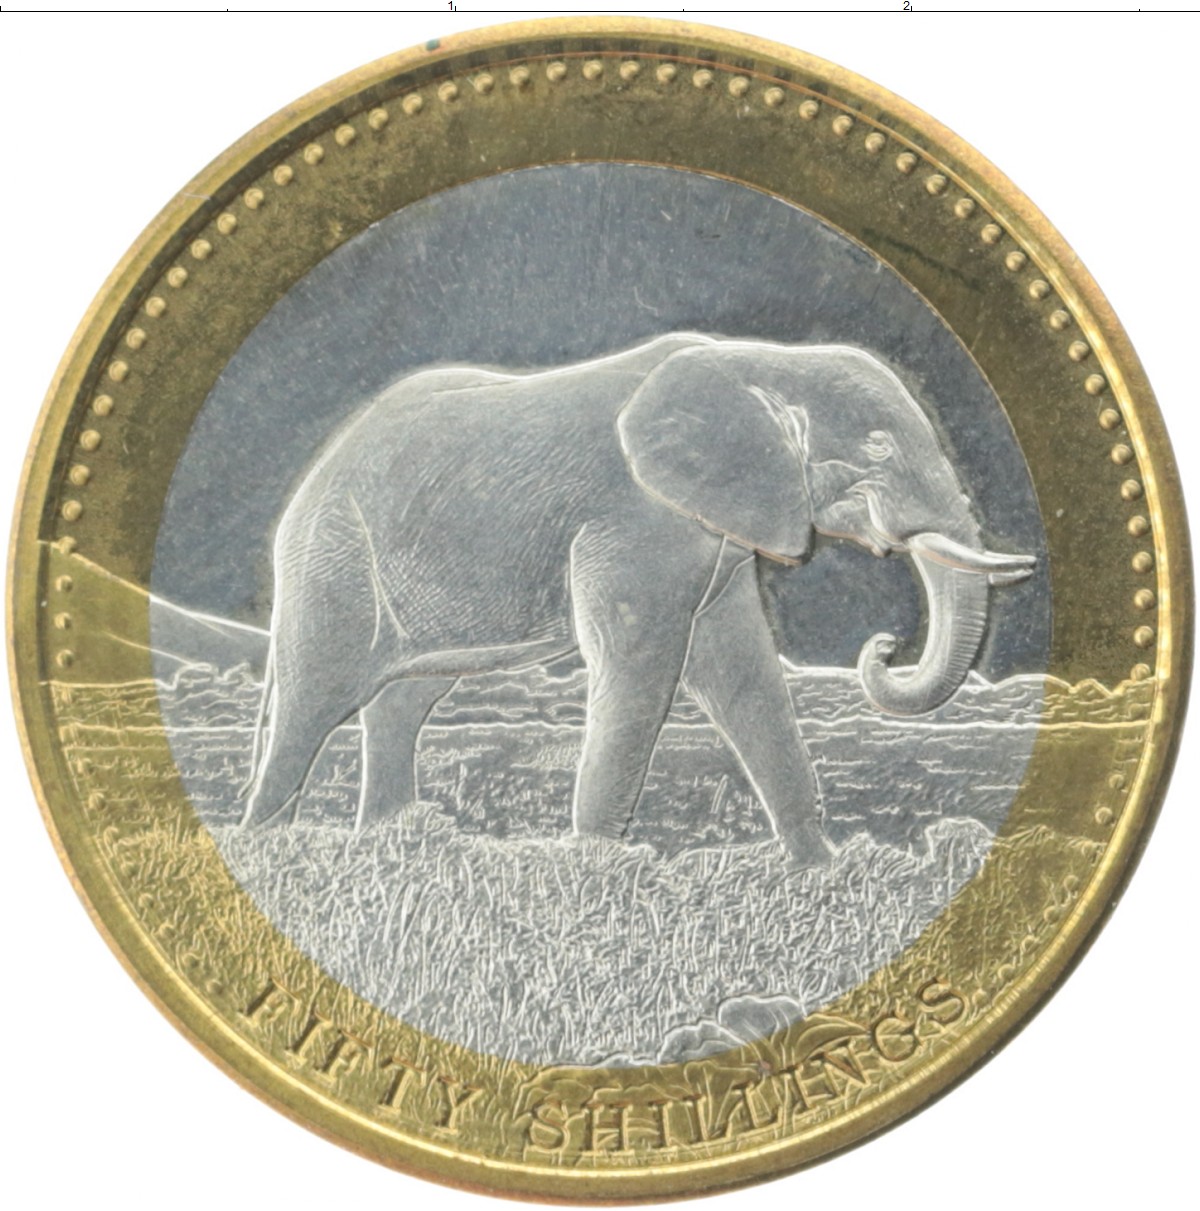 Bendog монета. Сомали 50 шиллингов Биметалл. Сомали монета 50 шиллингов. Монета Сомали со слоном. Монеты Сомали 2013 года.